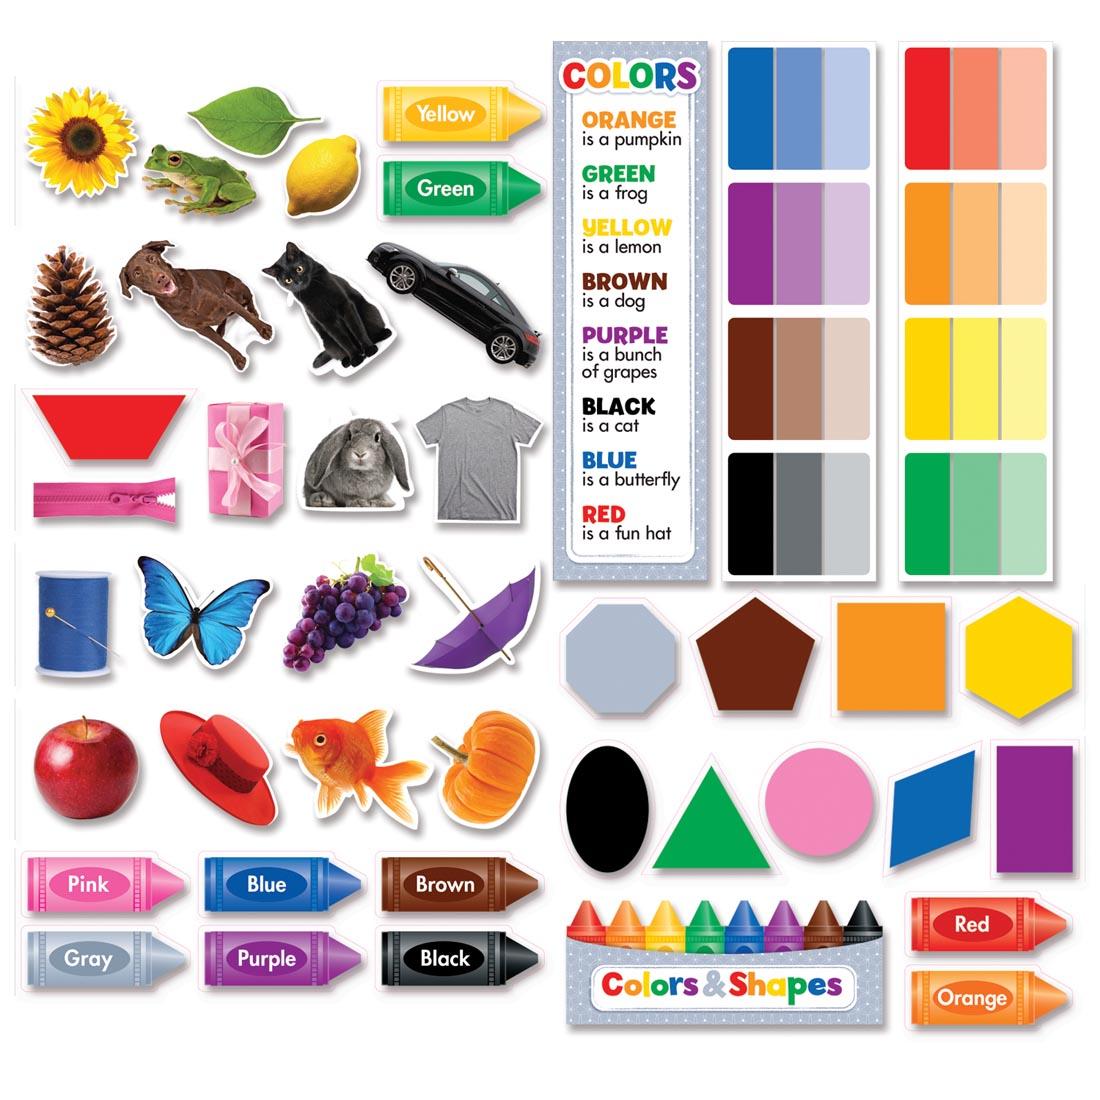 Colors & Shapes Mini Bulletin Board Set by Creative Teaching Press